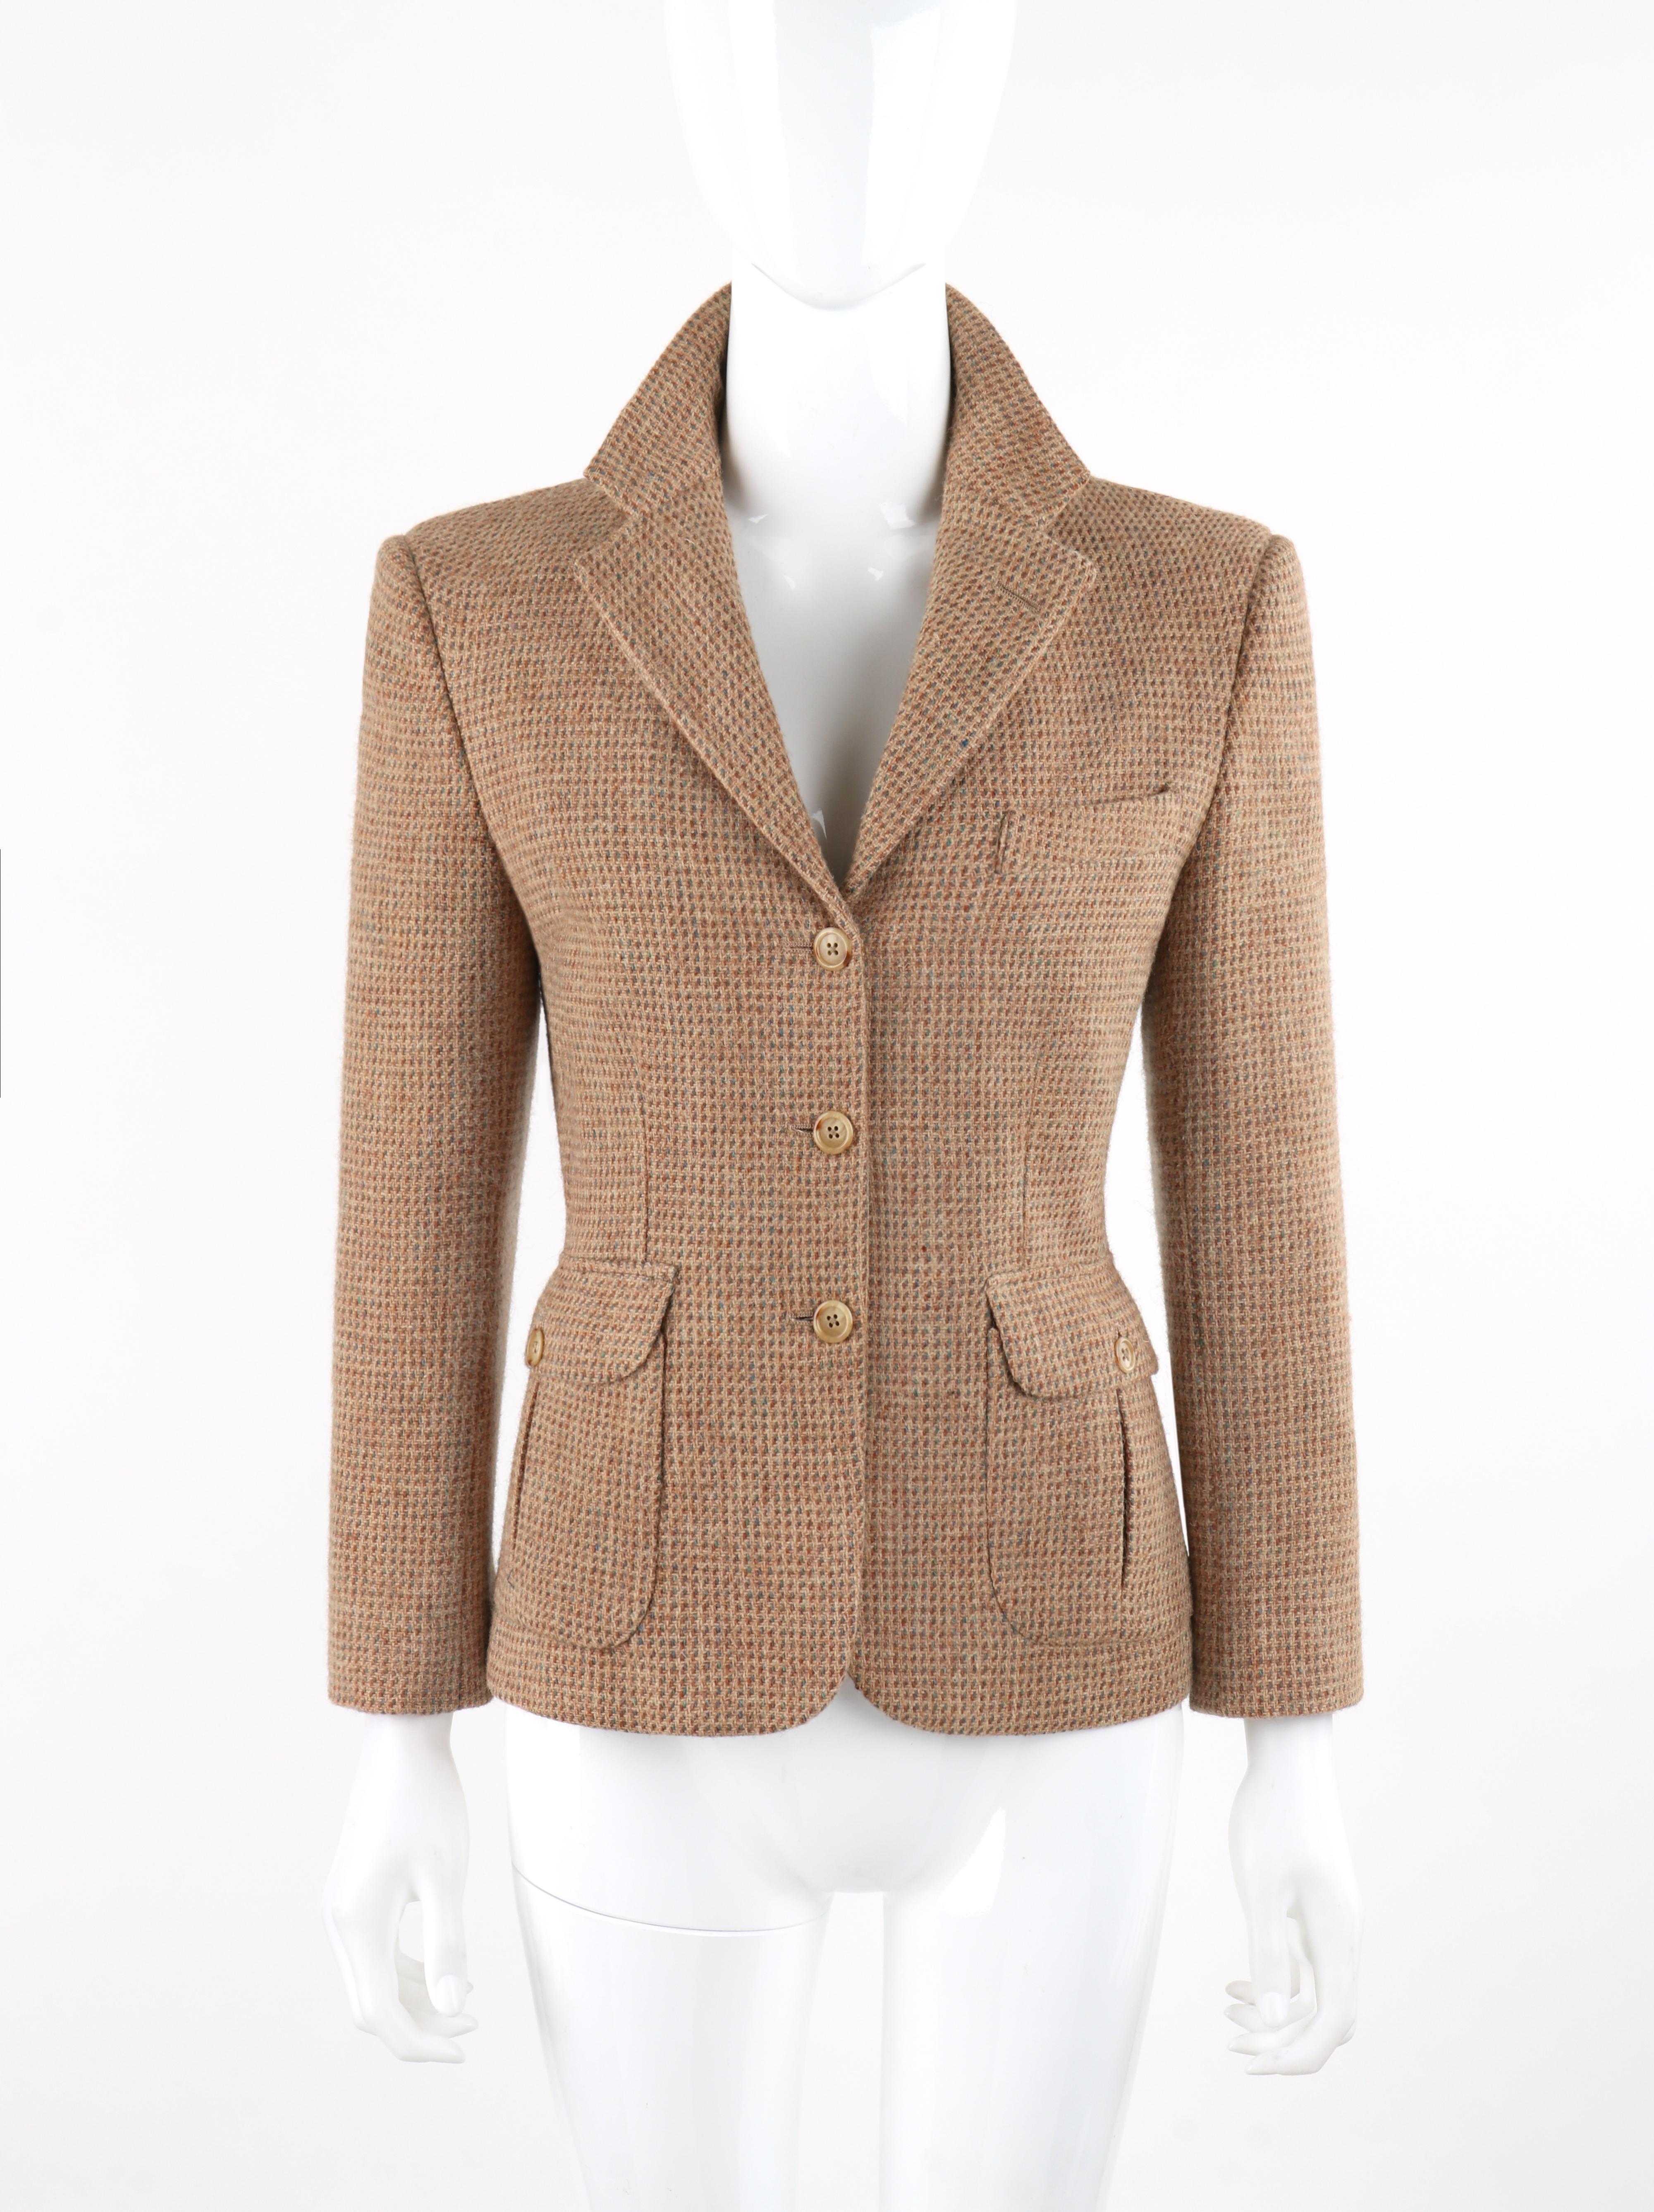 RALPH LAUREN c.1970's Brown Tan Tweed Wool Button Up Blazer Coat Jacket

Brand / Manufacturer: Ralph Lauren
Circa: 1970's
Label(s): Ralph Lauren, Divina San Francisco, RN 44008
Style: Button Up Blazer
Color(s): Shades of tan and brown with hints of